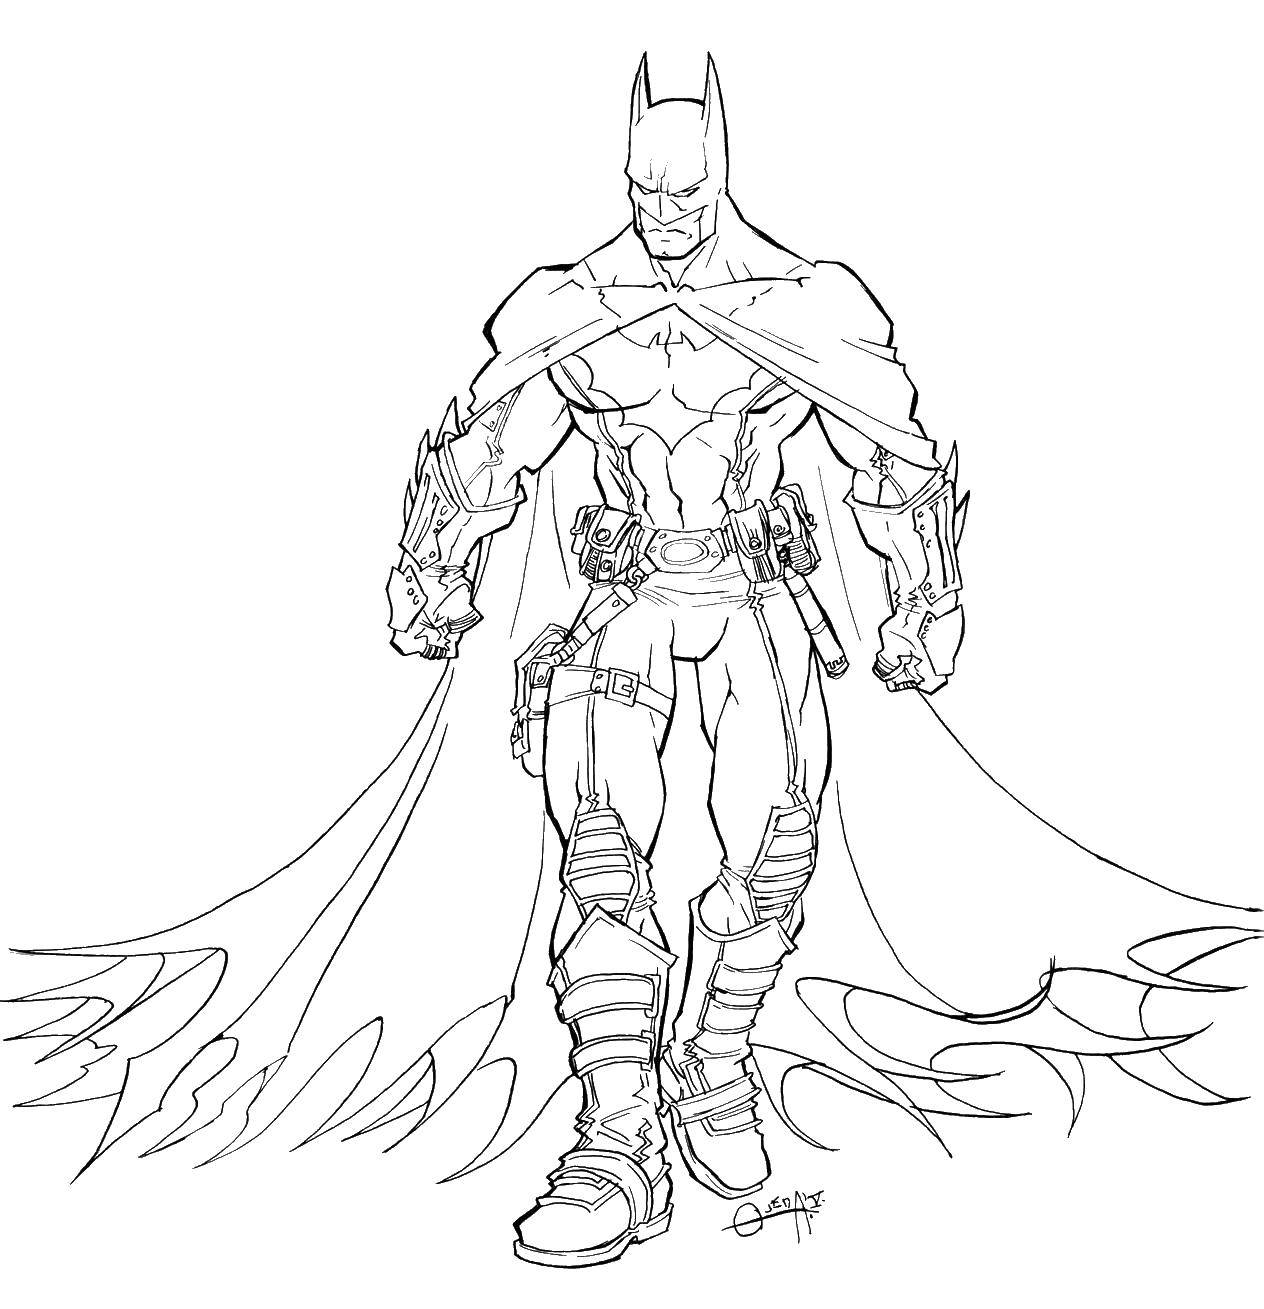 Coloring Equipped with Batman. Category Batman. Tags:  Batman, superheroes, superhero.